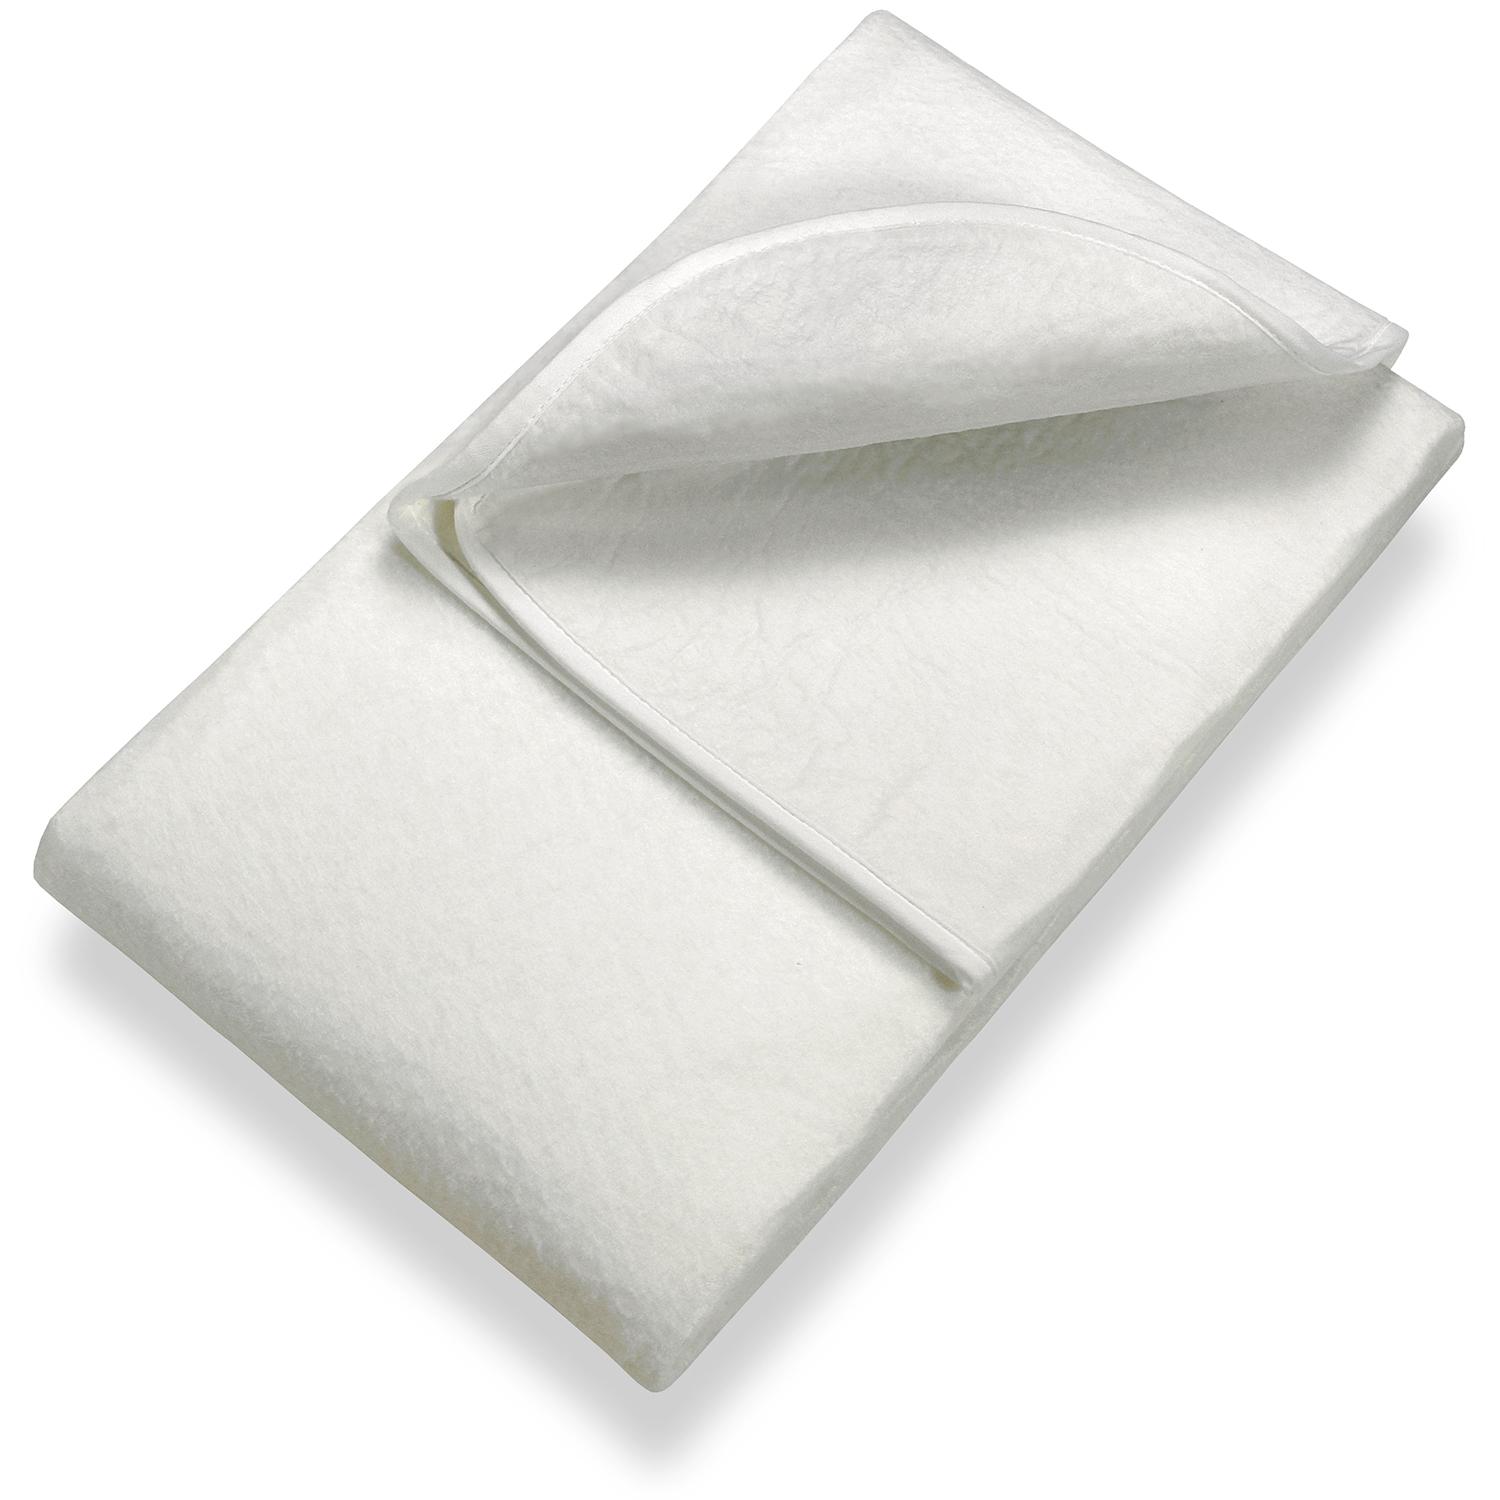 Sleezzz Basic podložka pod matraci 120 x 200 cm, chránič matrace na lamelový rošt, bílá barva